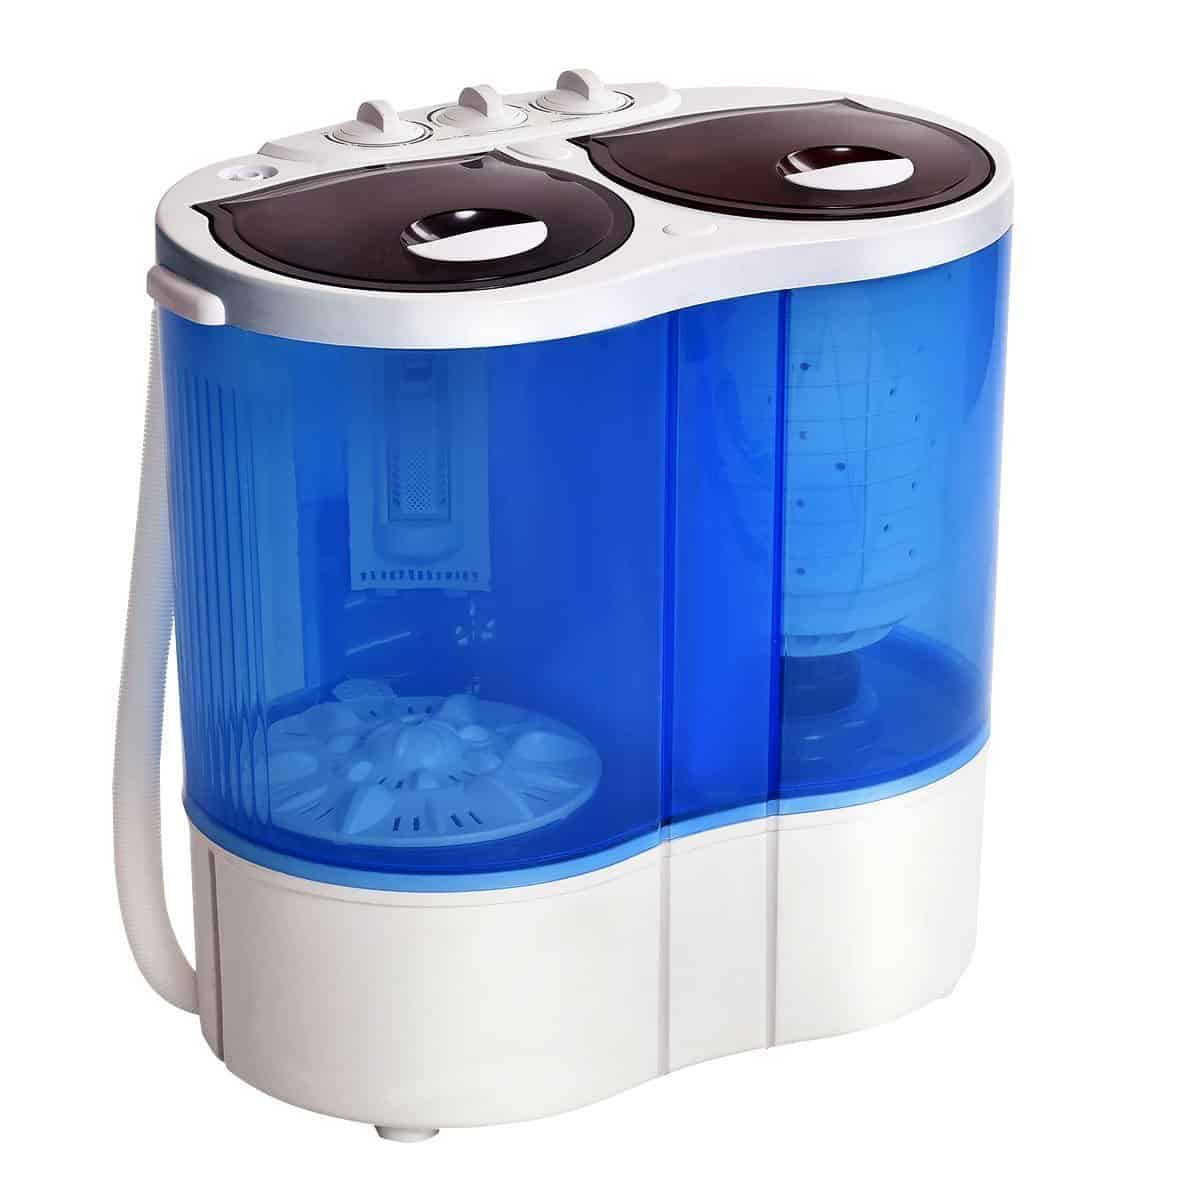 Giantex Portable mini washing machine